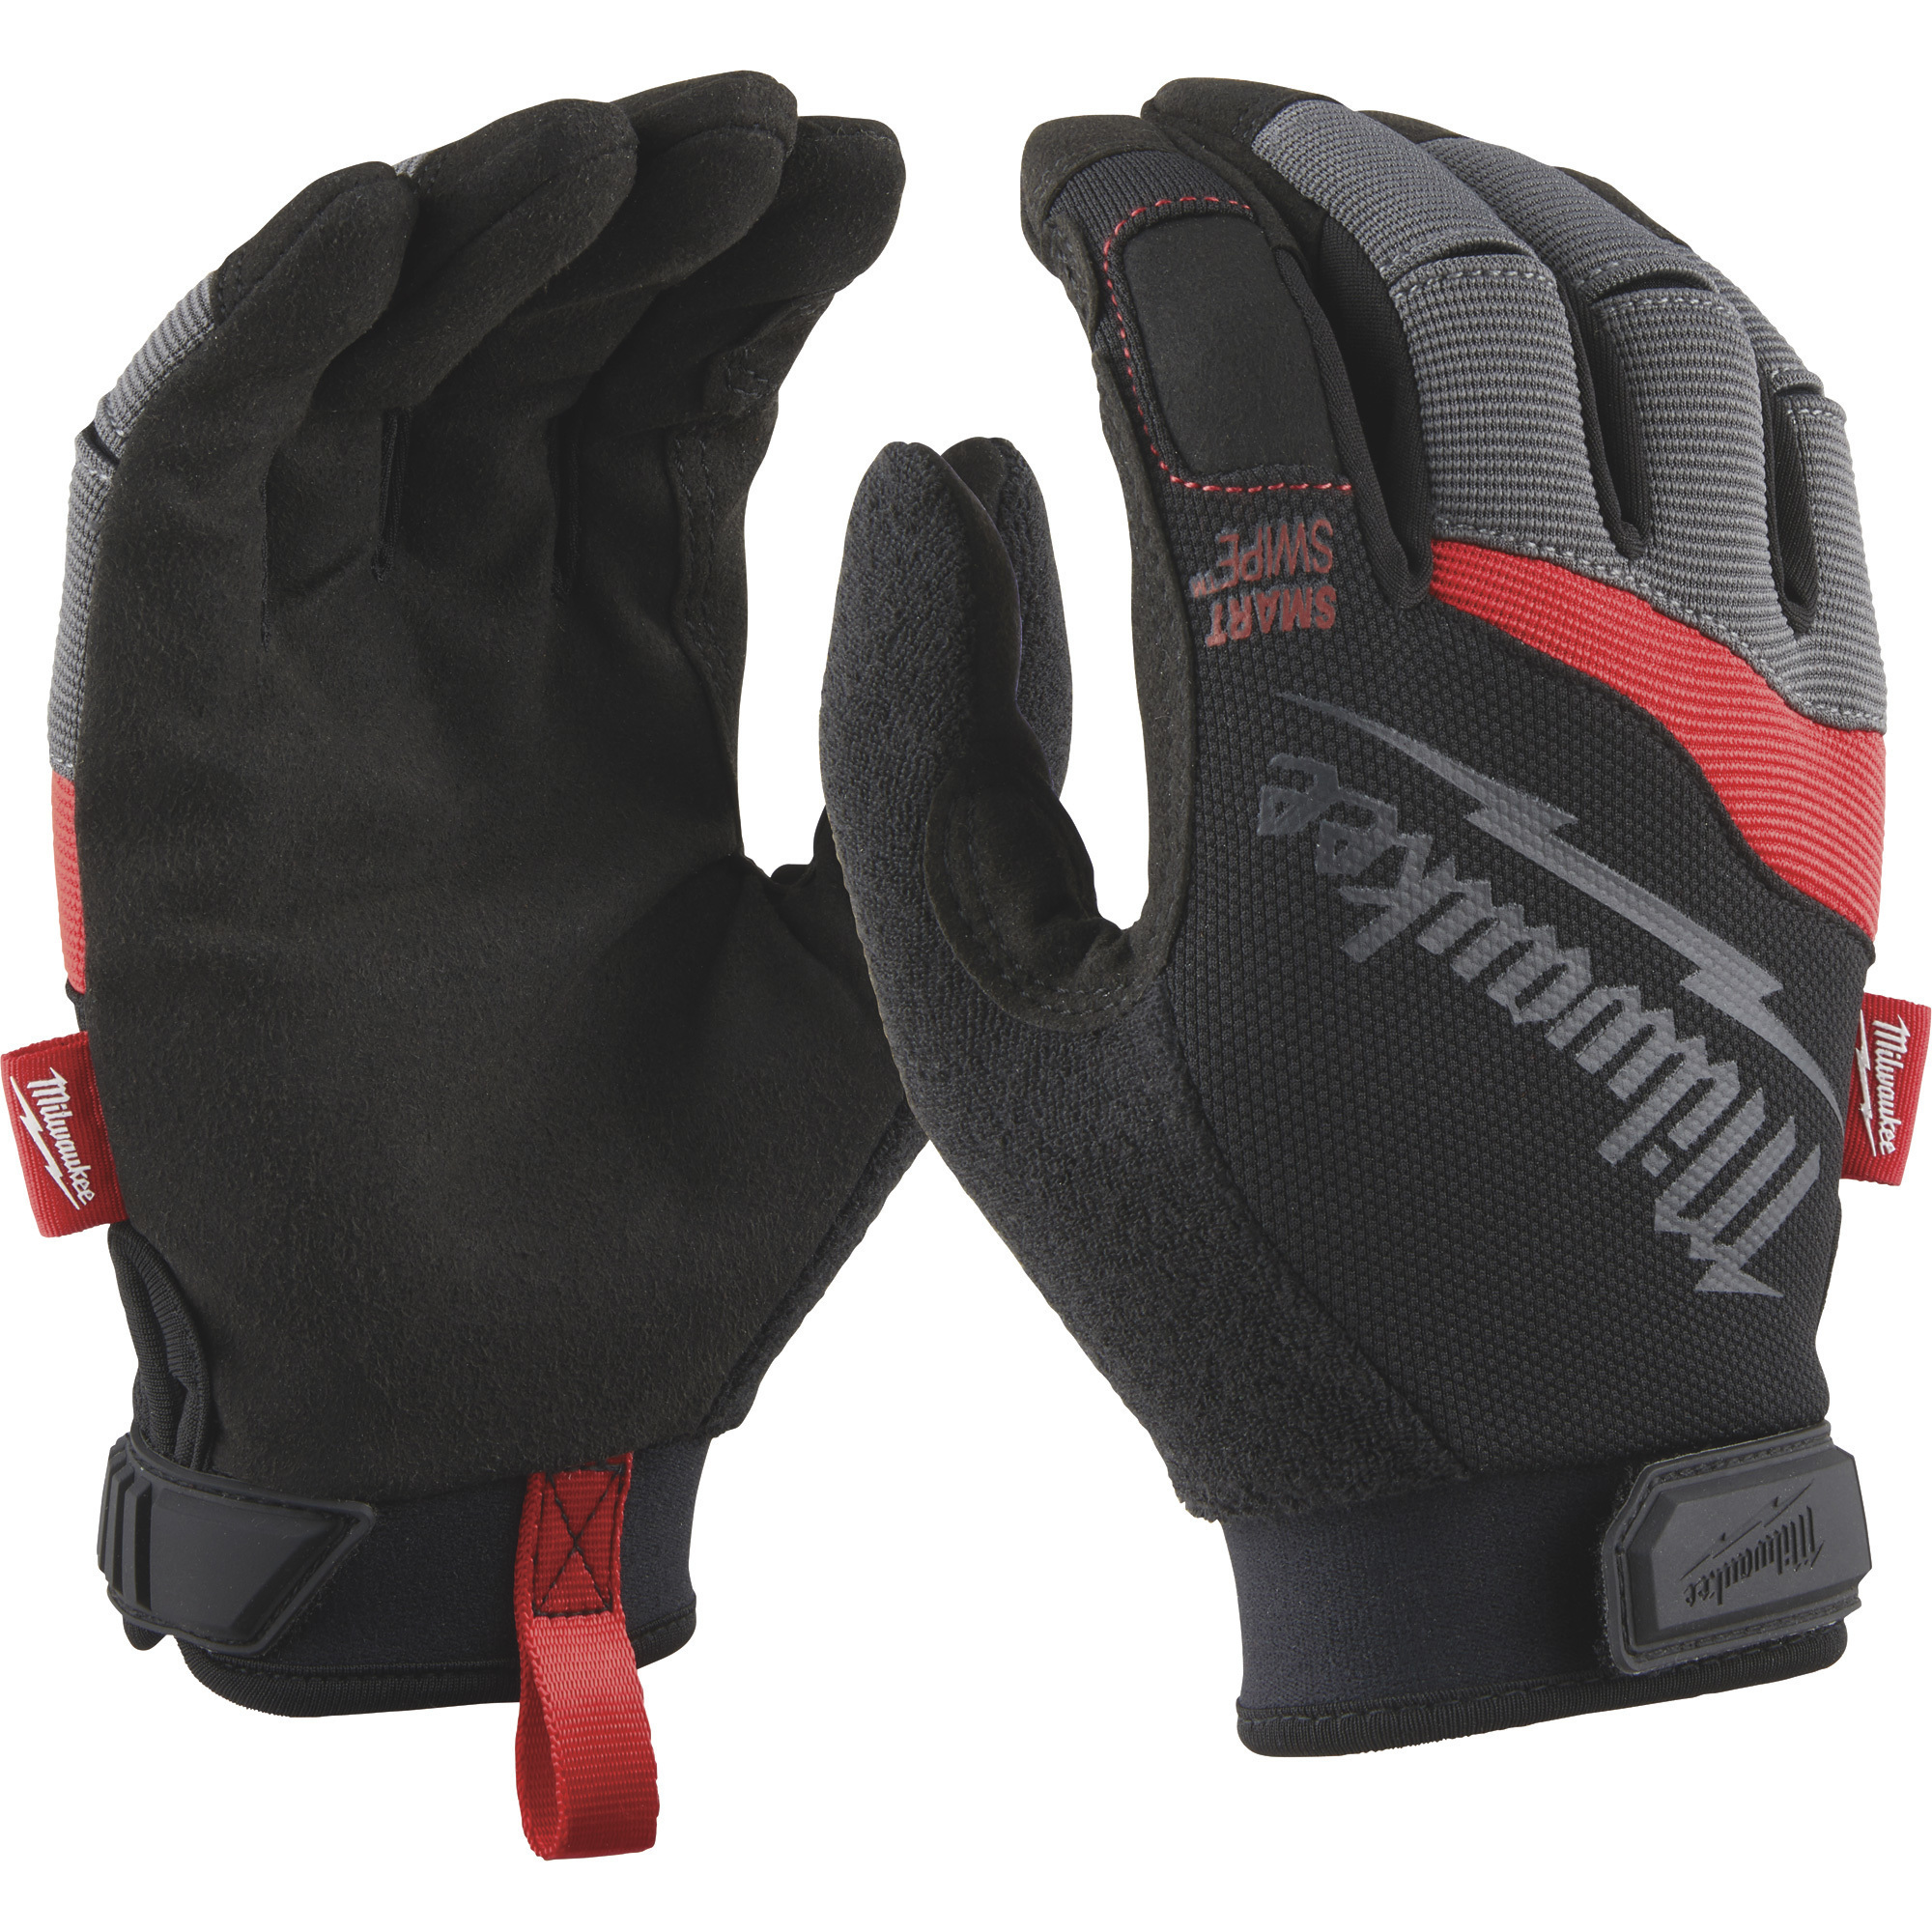 Milwaukee Men's Performance Work Gloves, Black/Gray/Red, XL, Model 48-22-8723